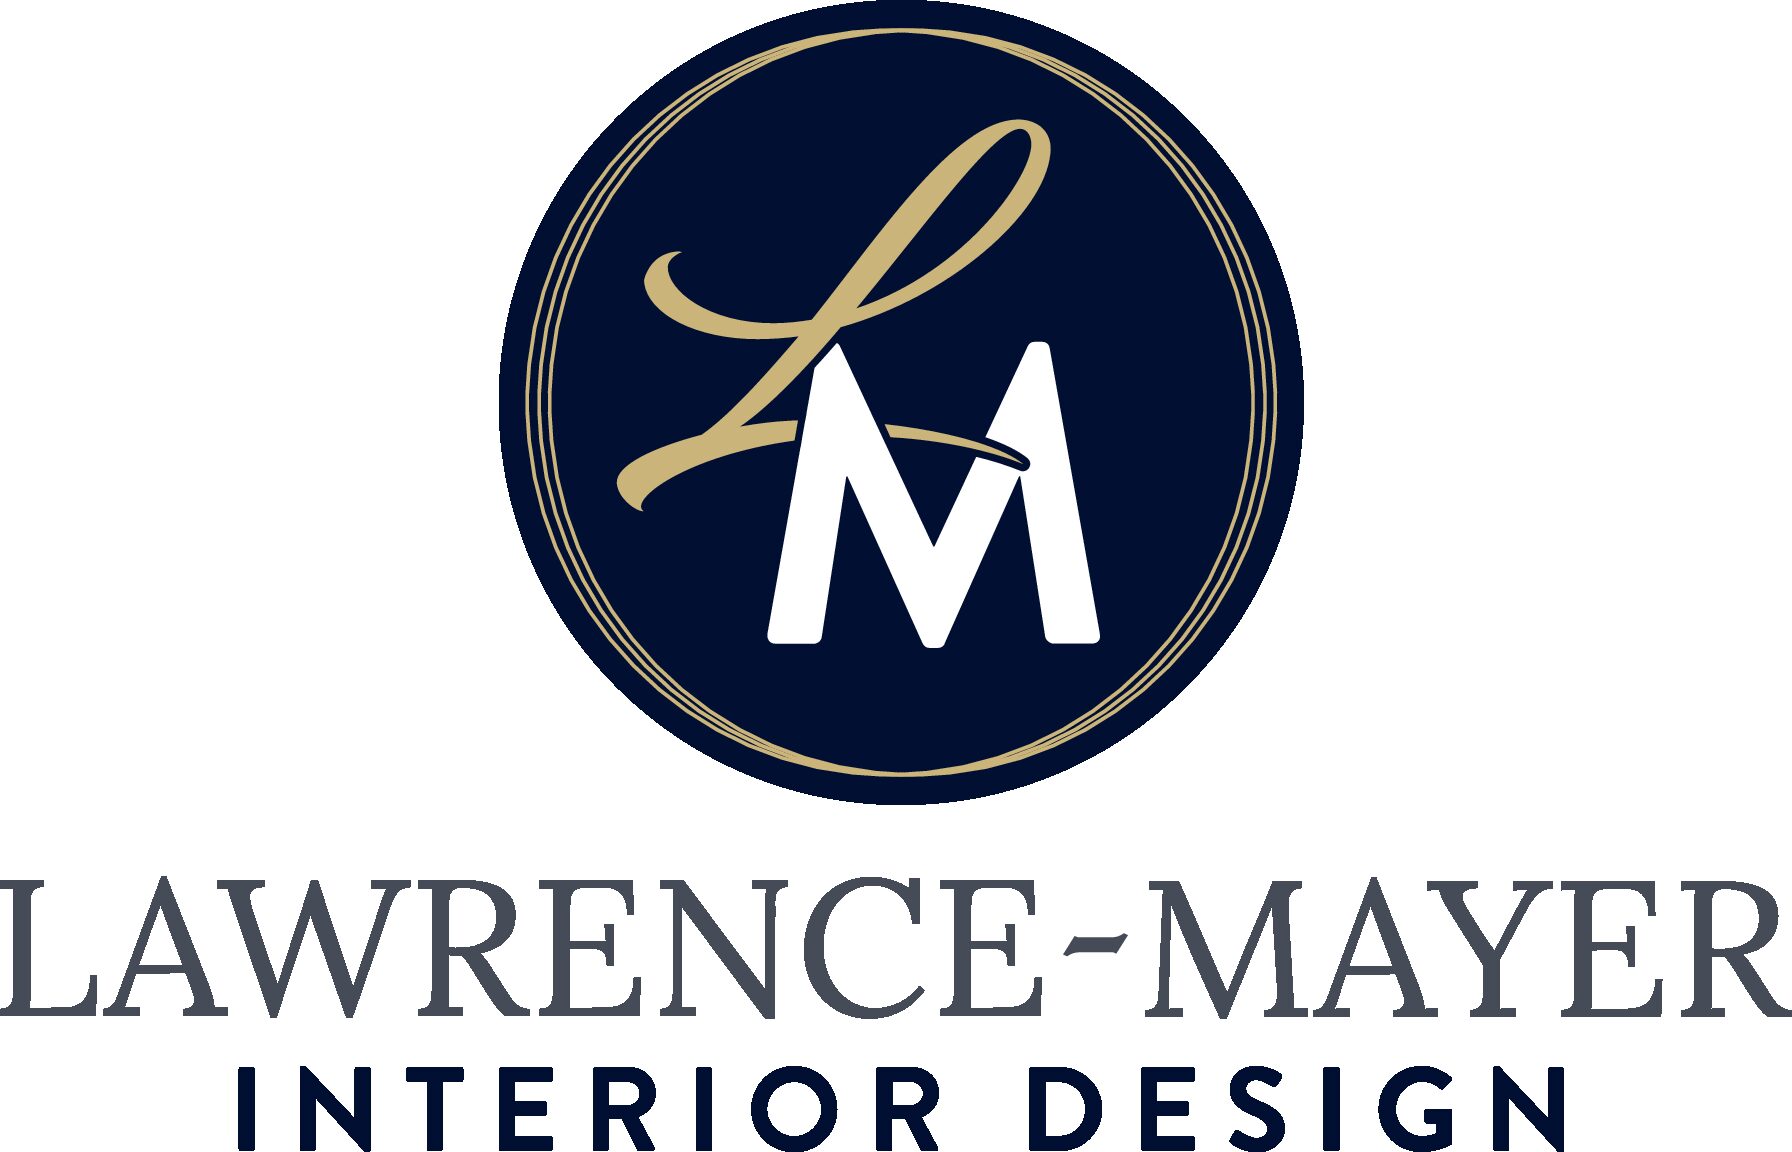 Lawrence-Mayer Interior Design